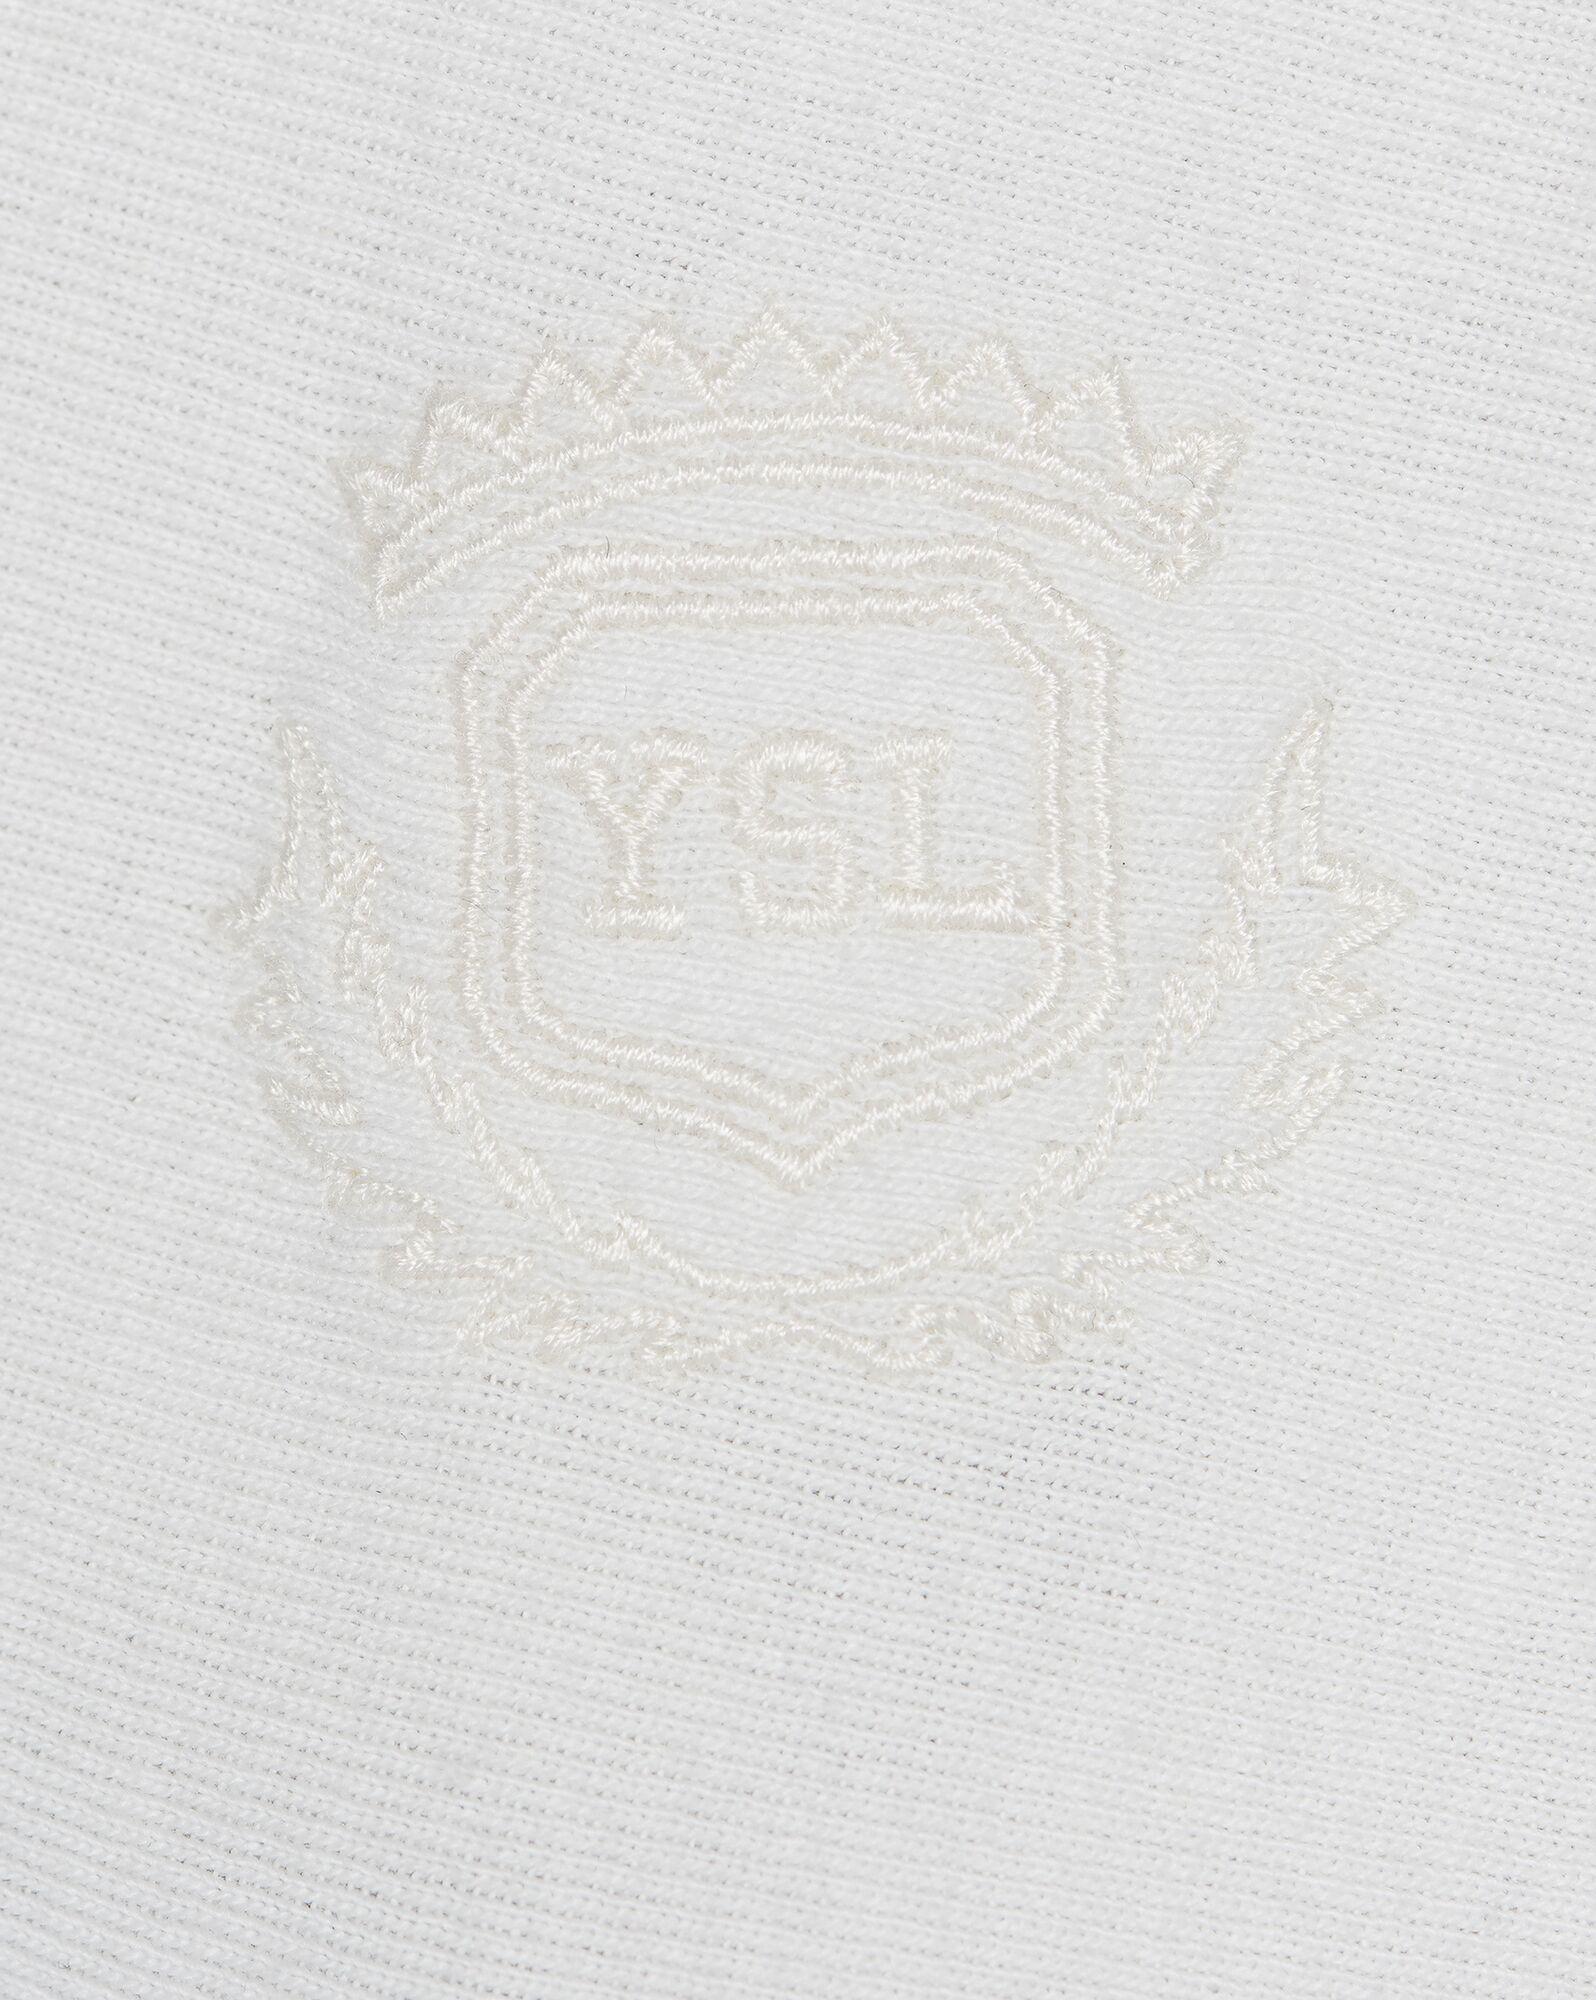 Vintage YSL Yves Saint Laurent Bleach Splatter T Shirt Size L